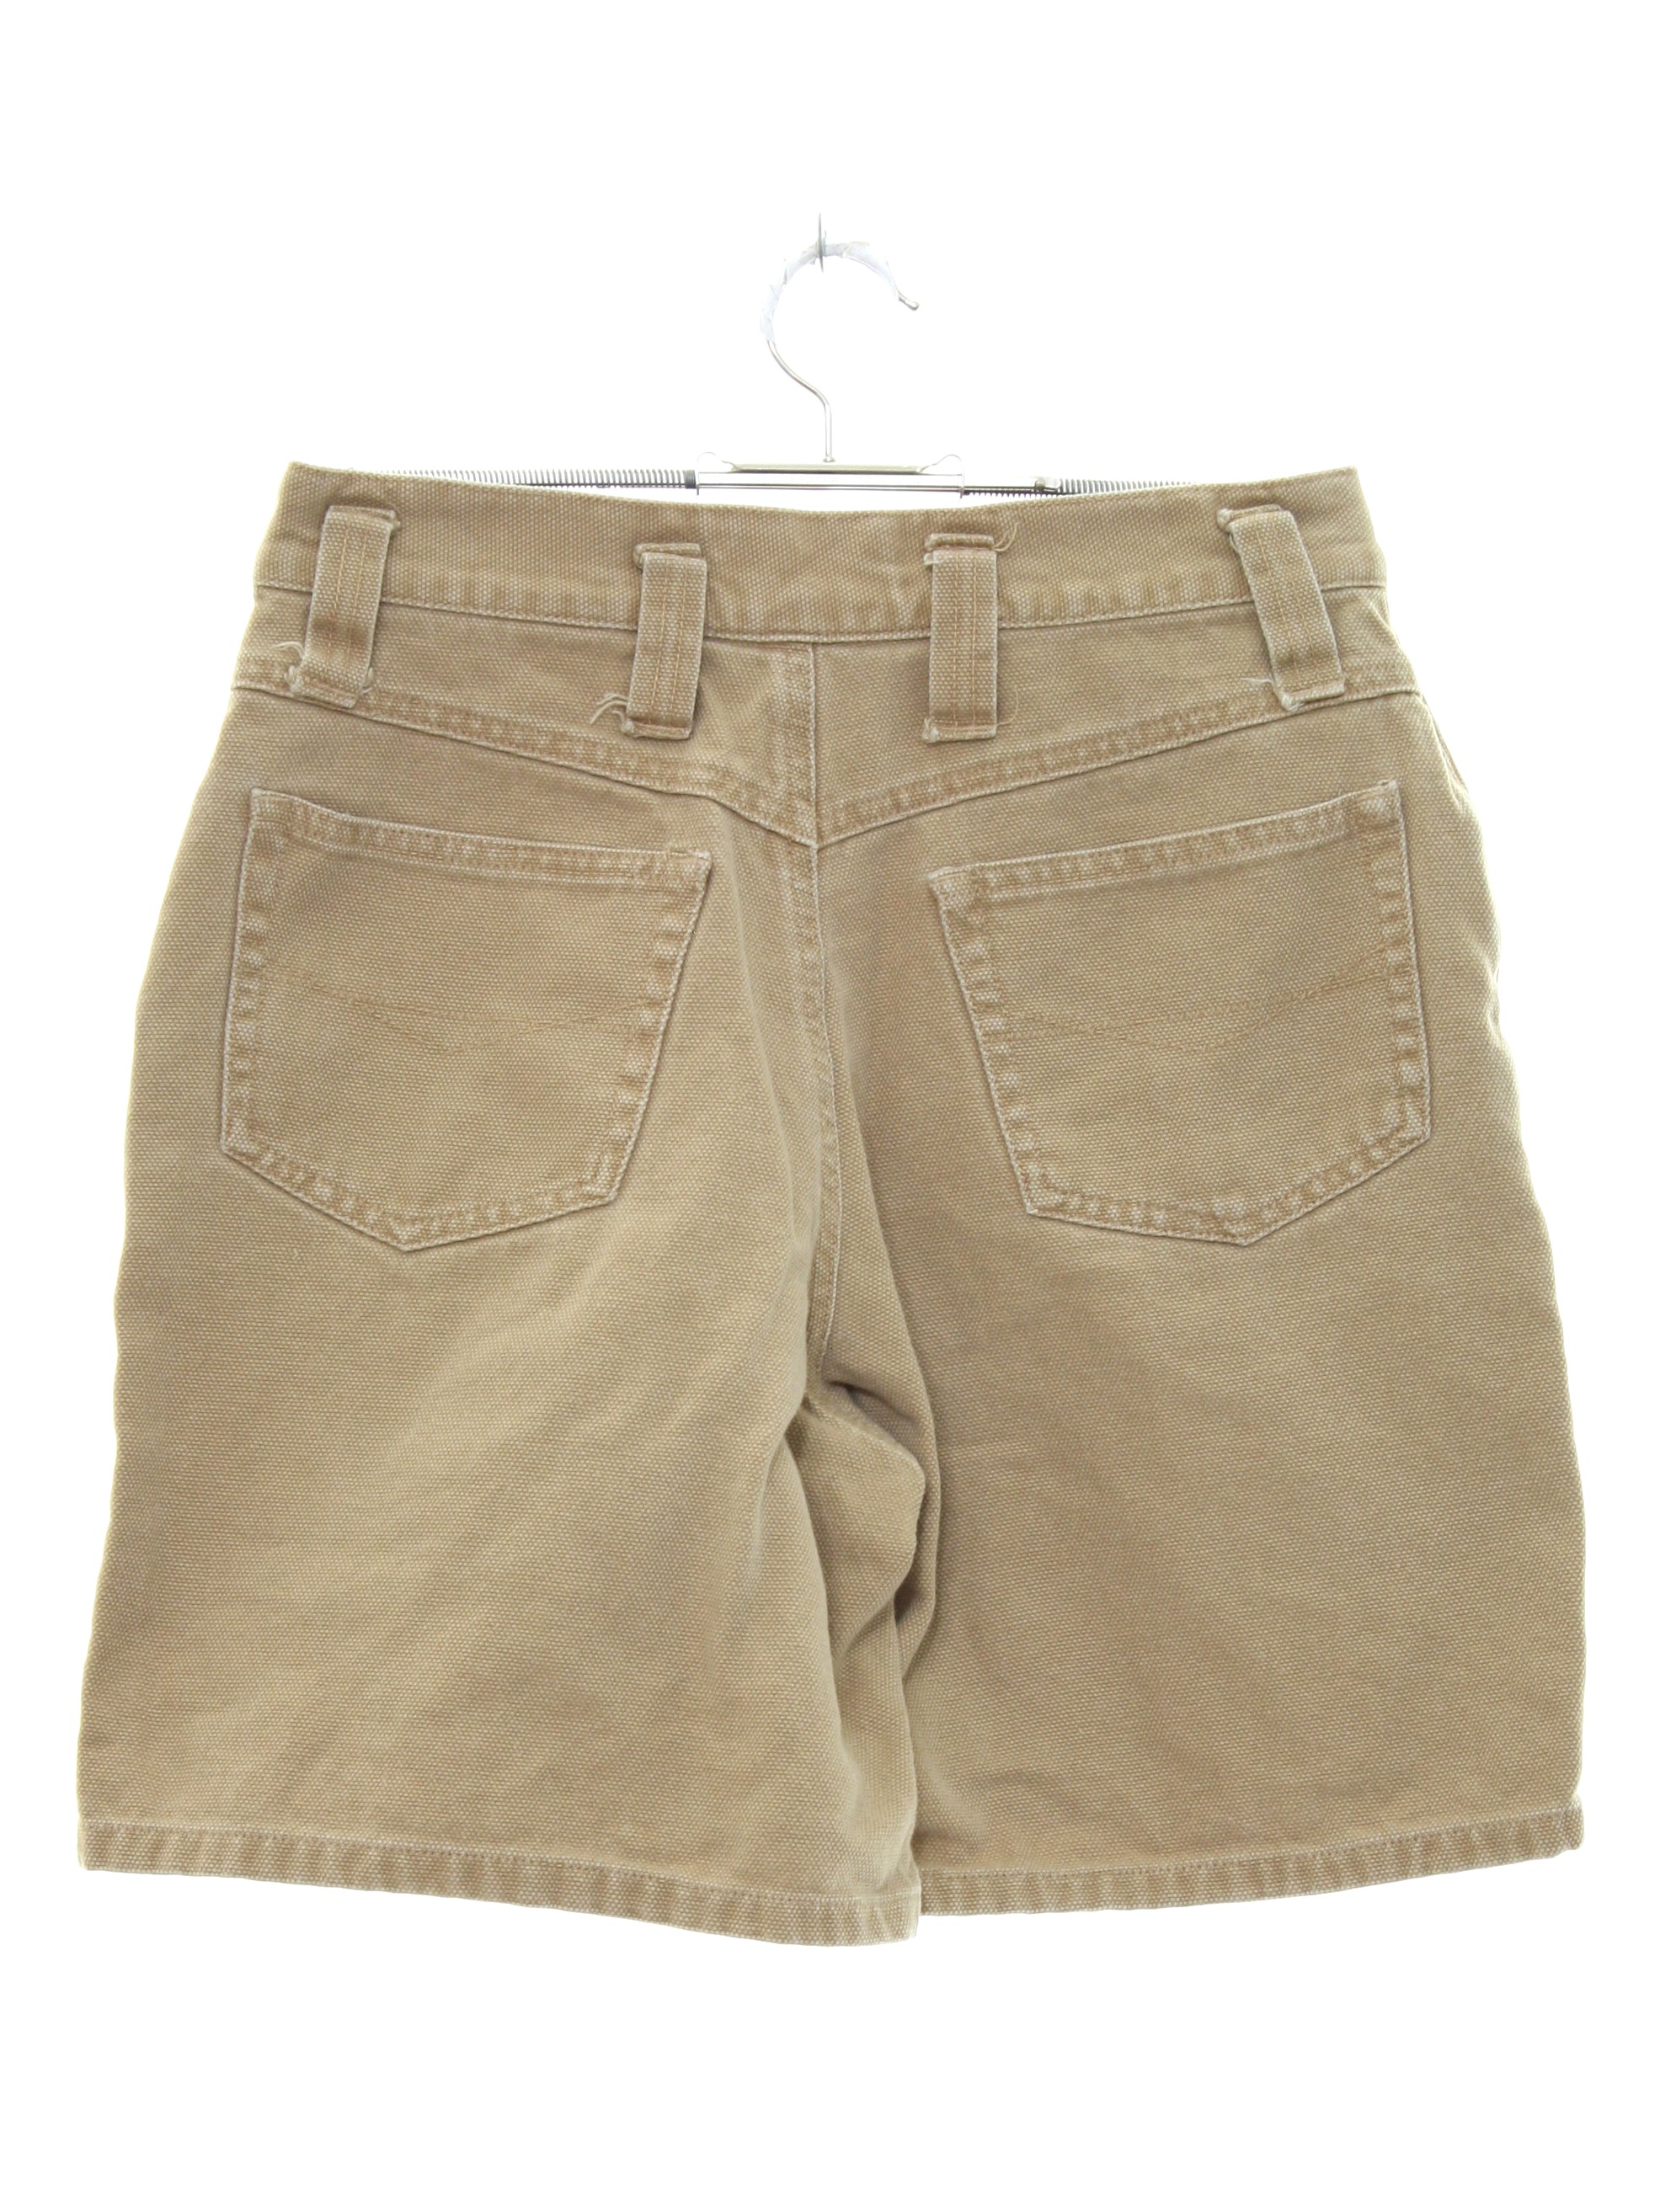 80s style denim shorts